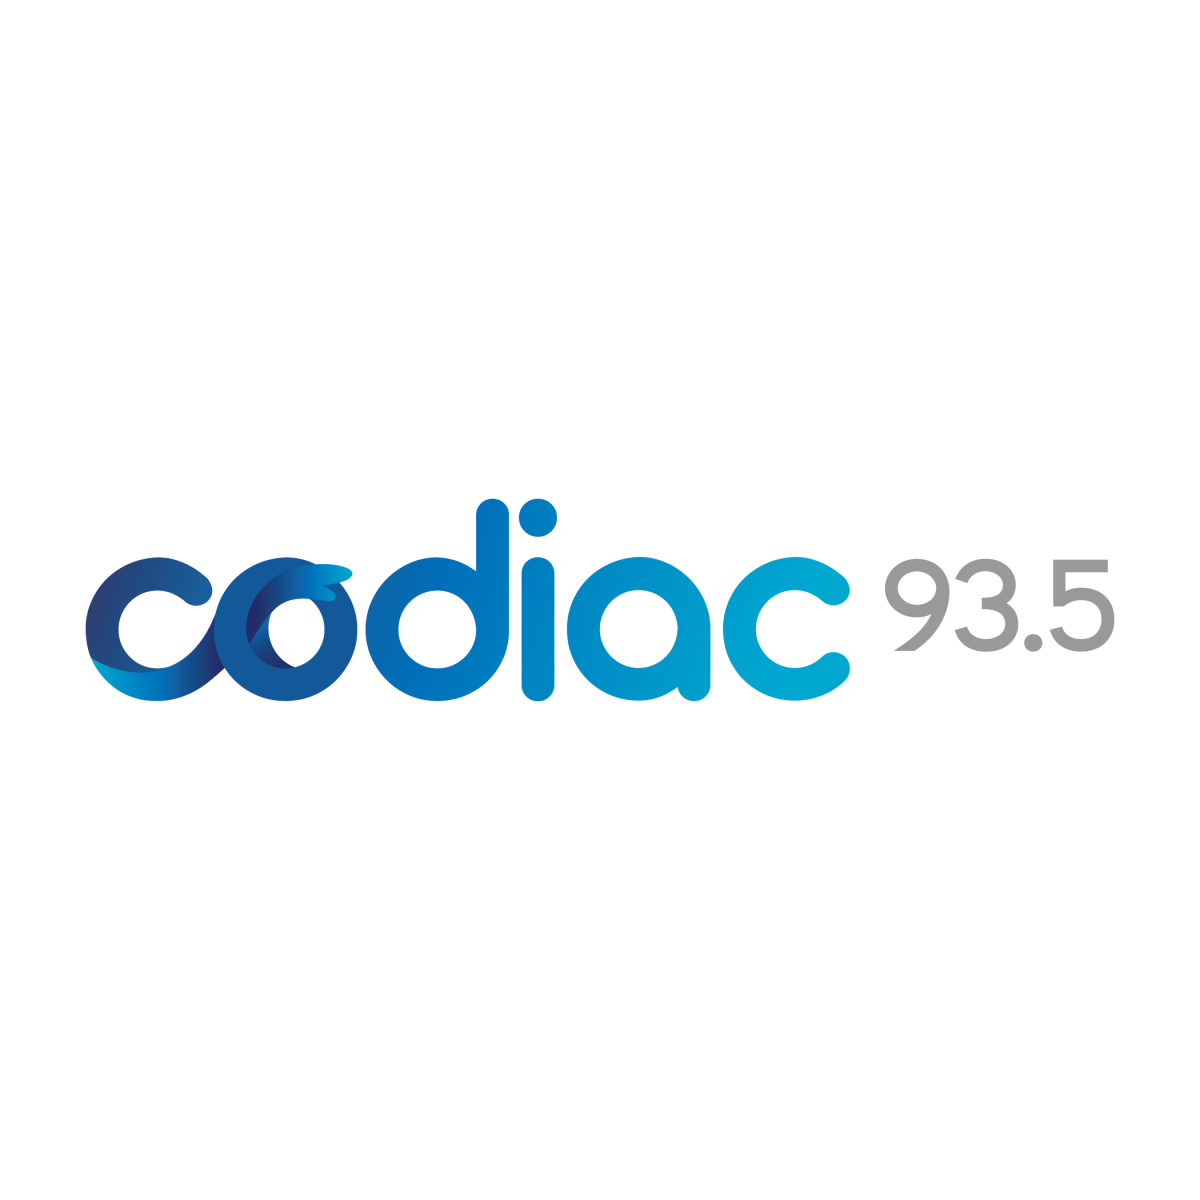 Codiac FM